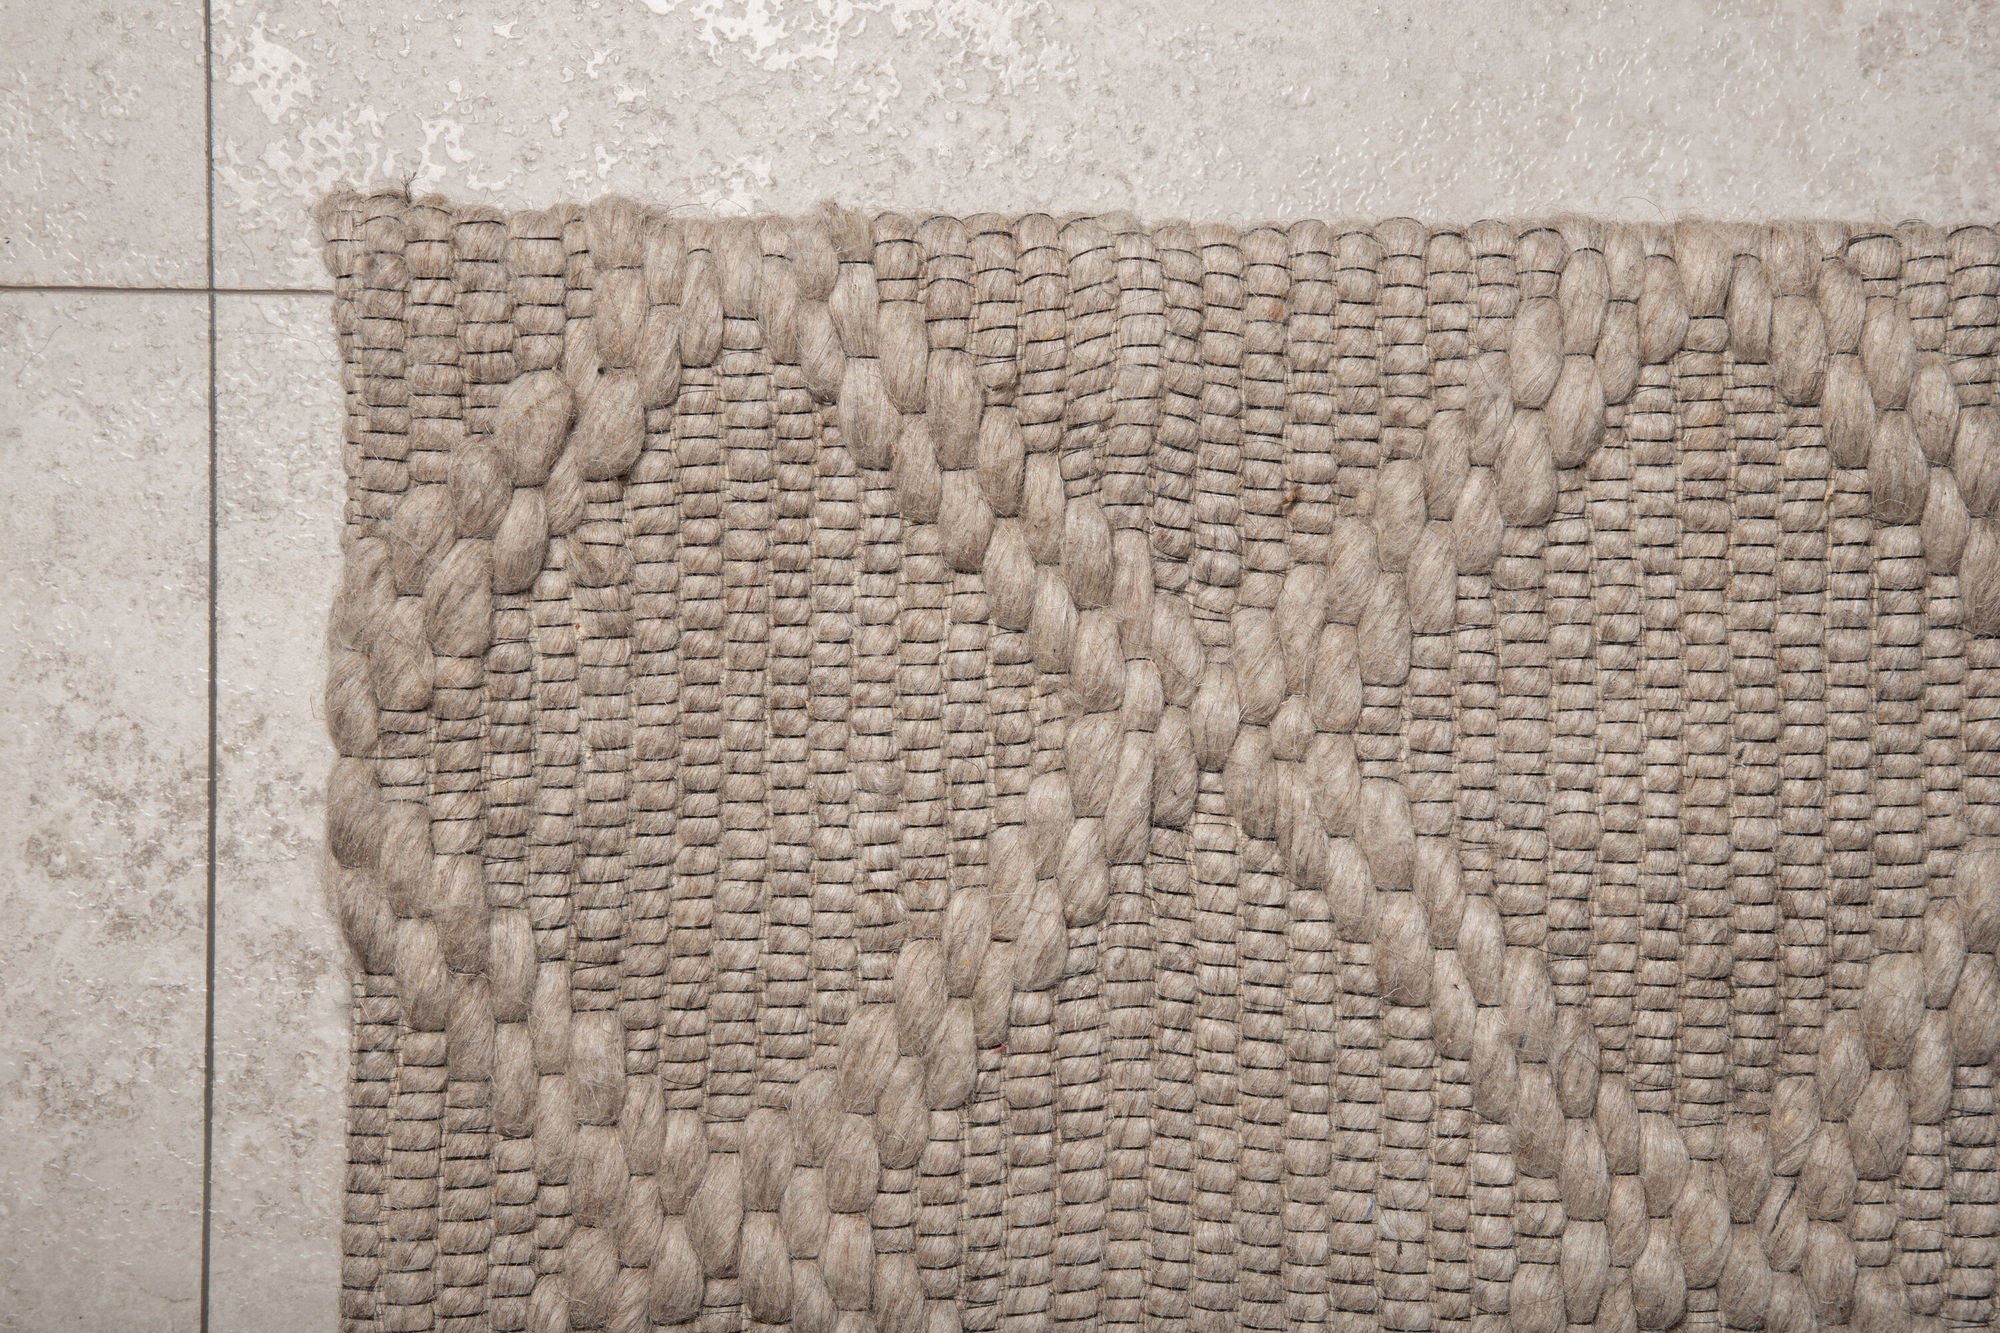 Venture Home Cloudy Wool Carpet - 160*230- Beige